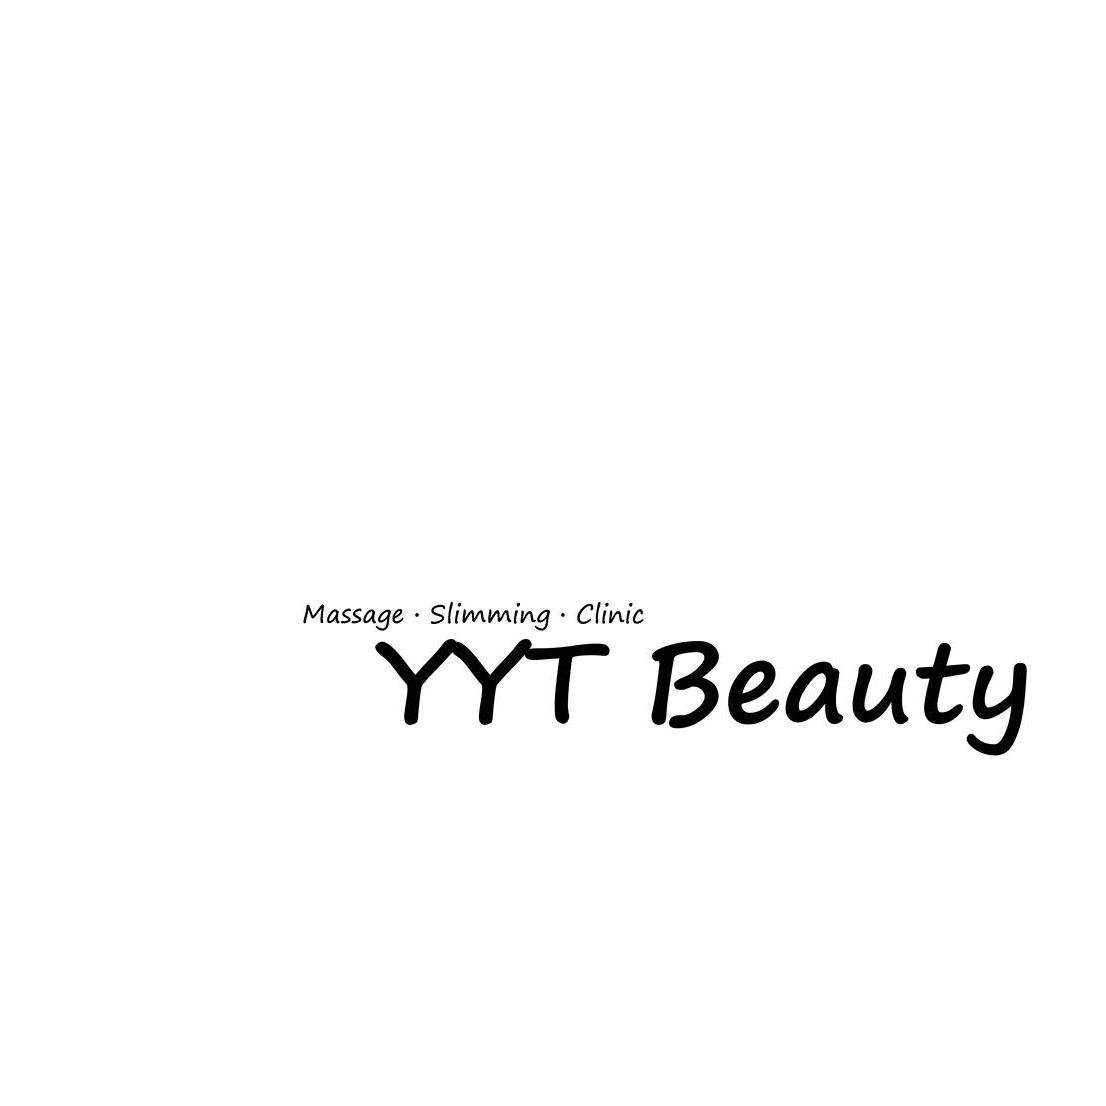 光學美容: YYT Beauty (旺角)